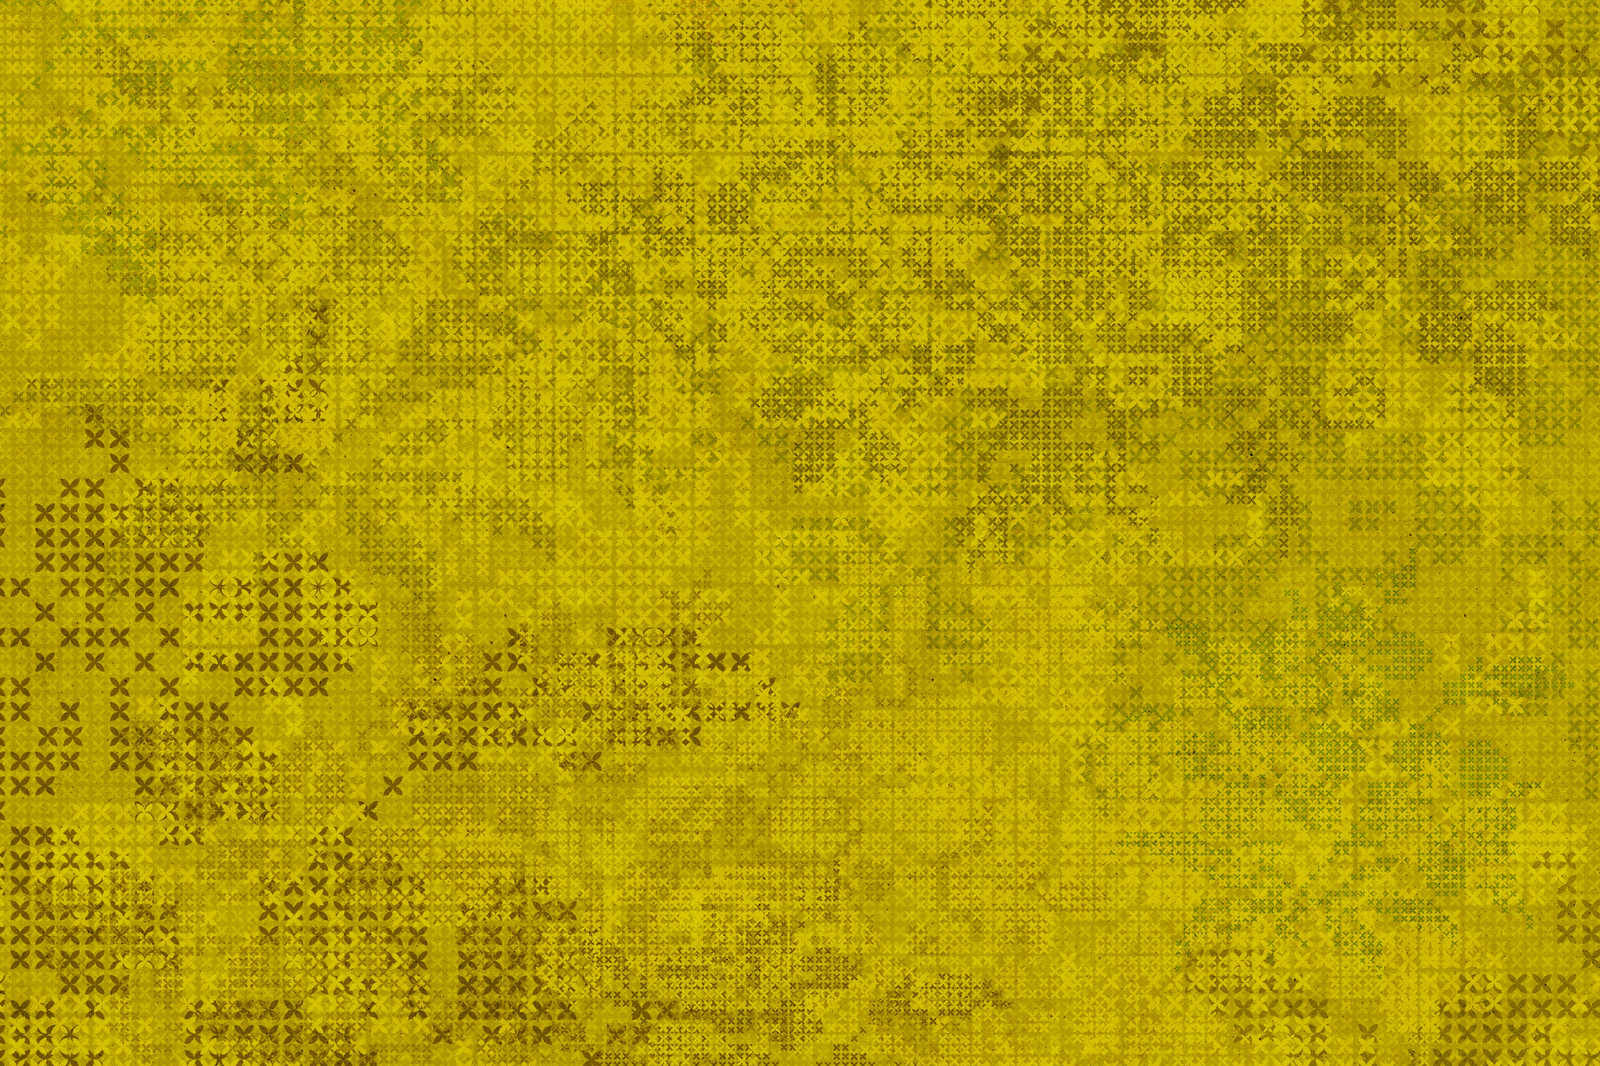             Pixel Canvas schilderij Kruissteek patroon - 1.20 m x 0.80 m
        